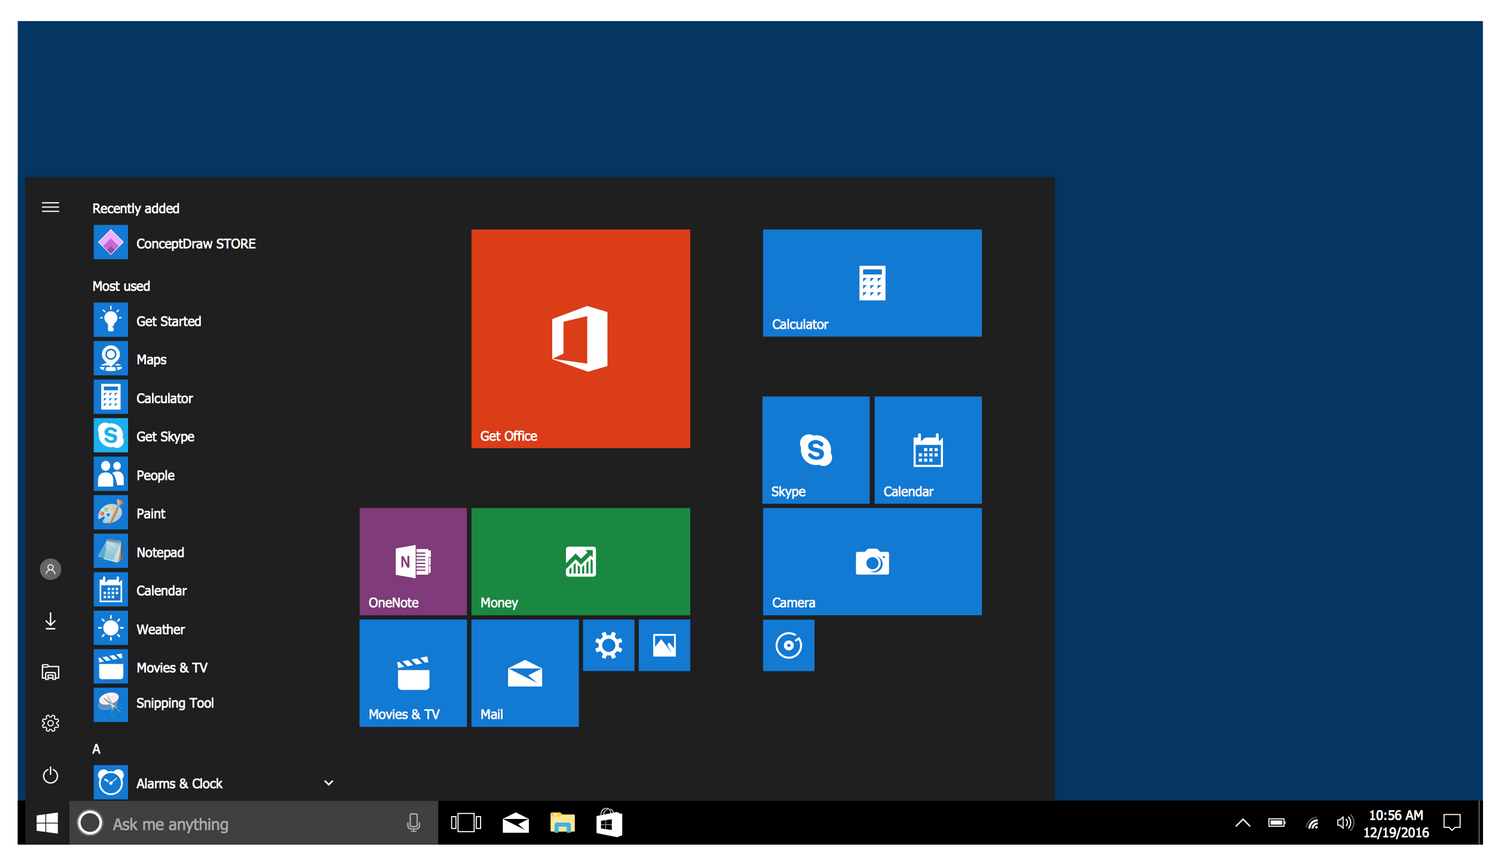 Windows 10 User Interface — Start Menu